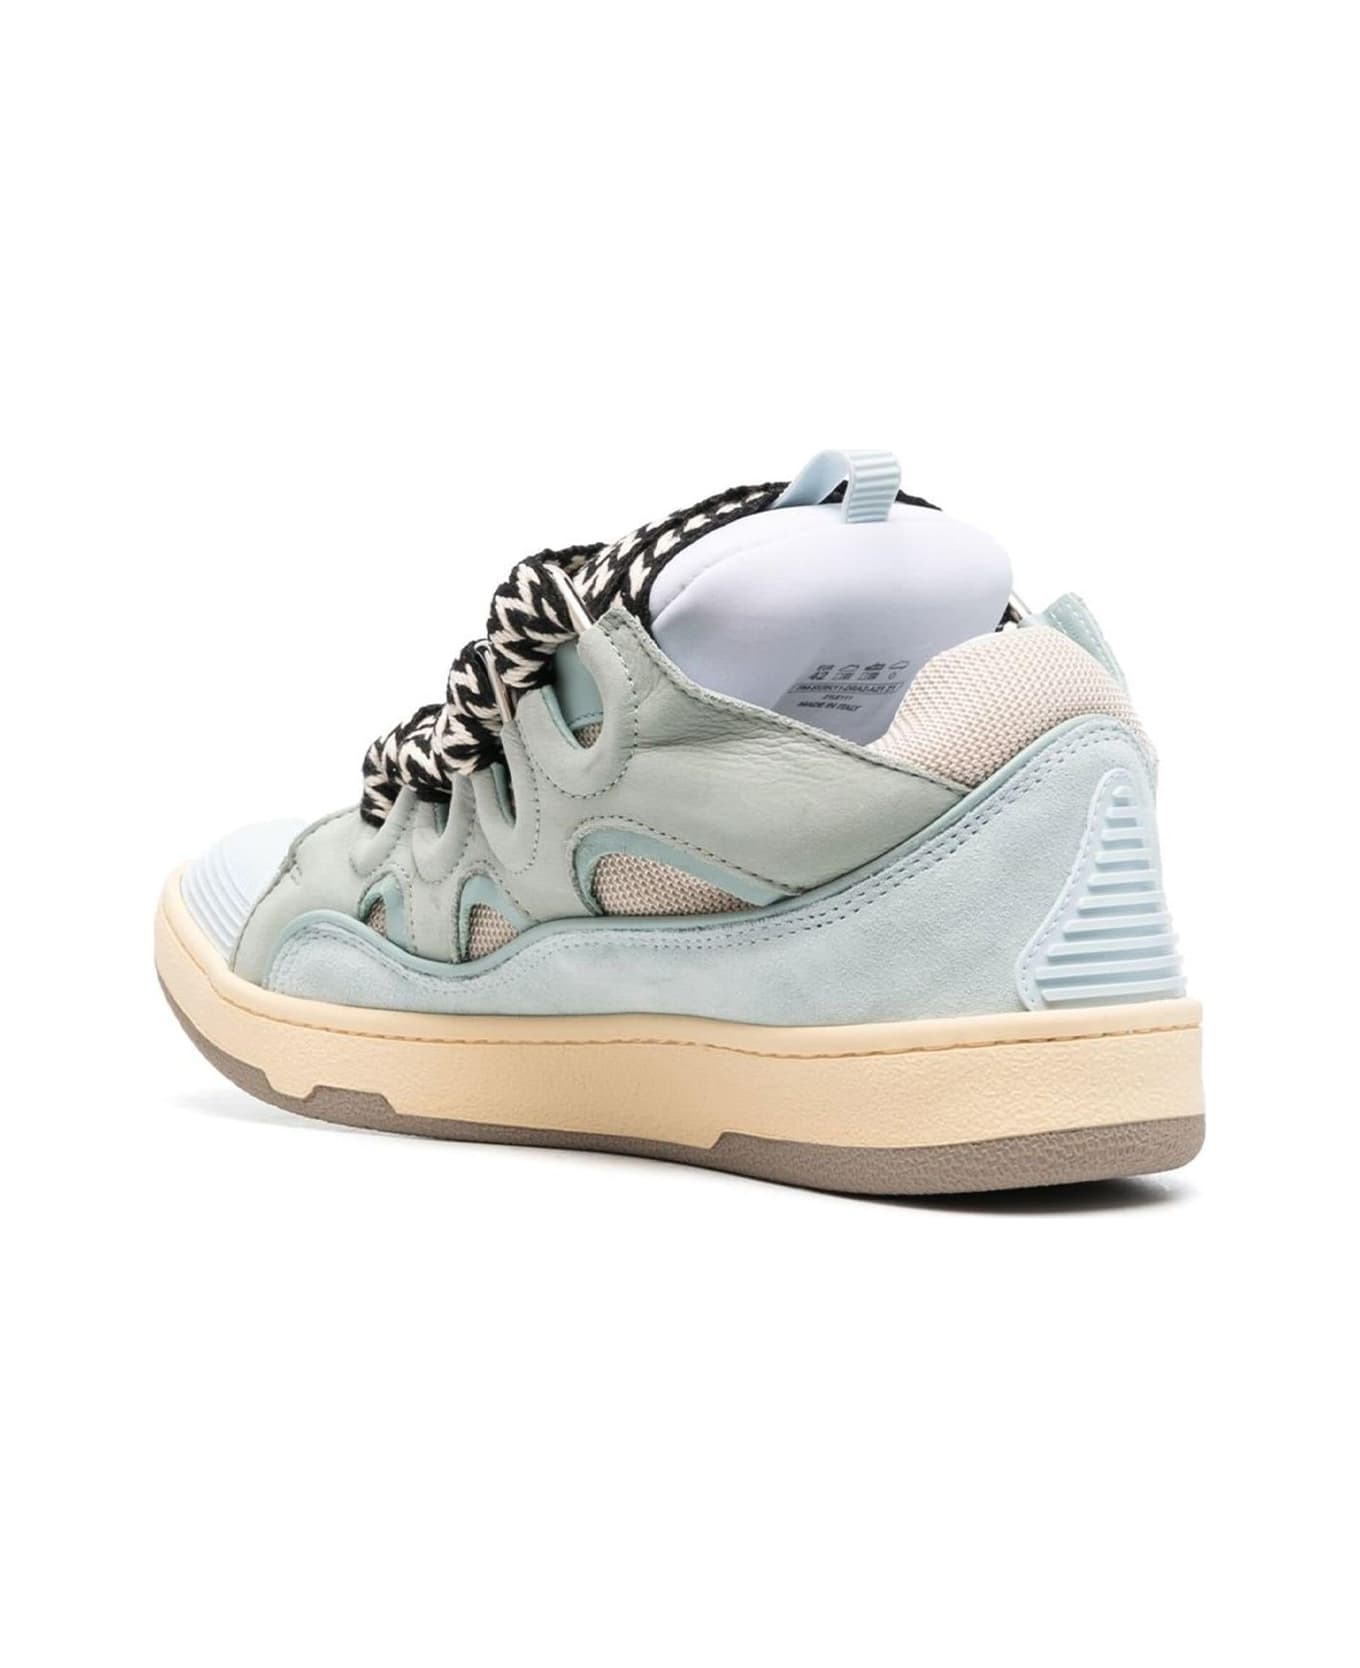 Lanvin Sneakers - PALE BLUE